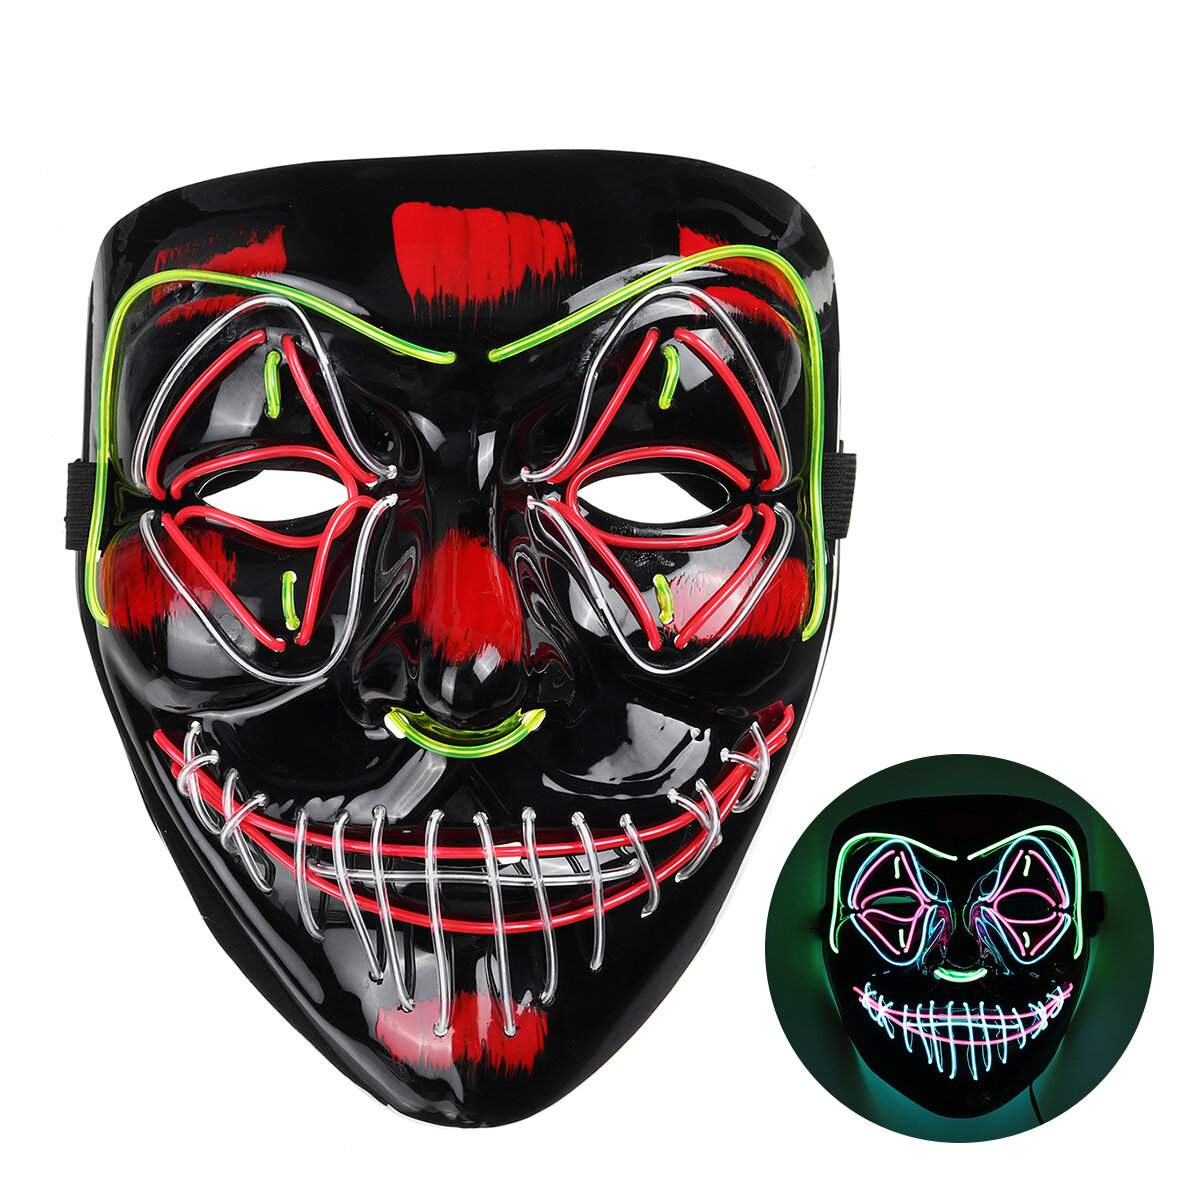 

Skeleton Mask EL Wire Light Up Skull Mask for Halloween Costume Accessory